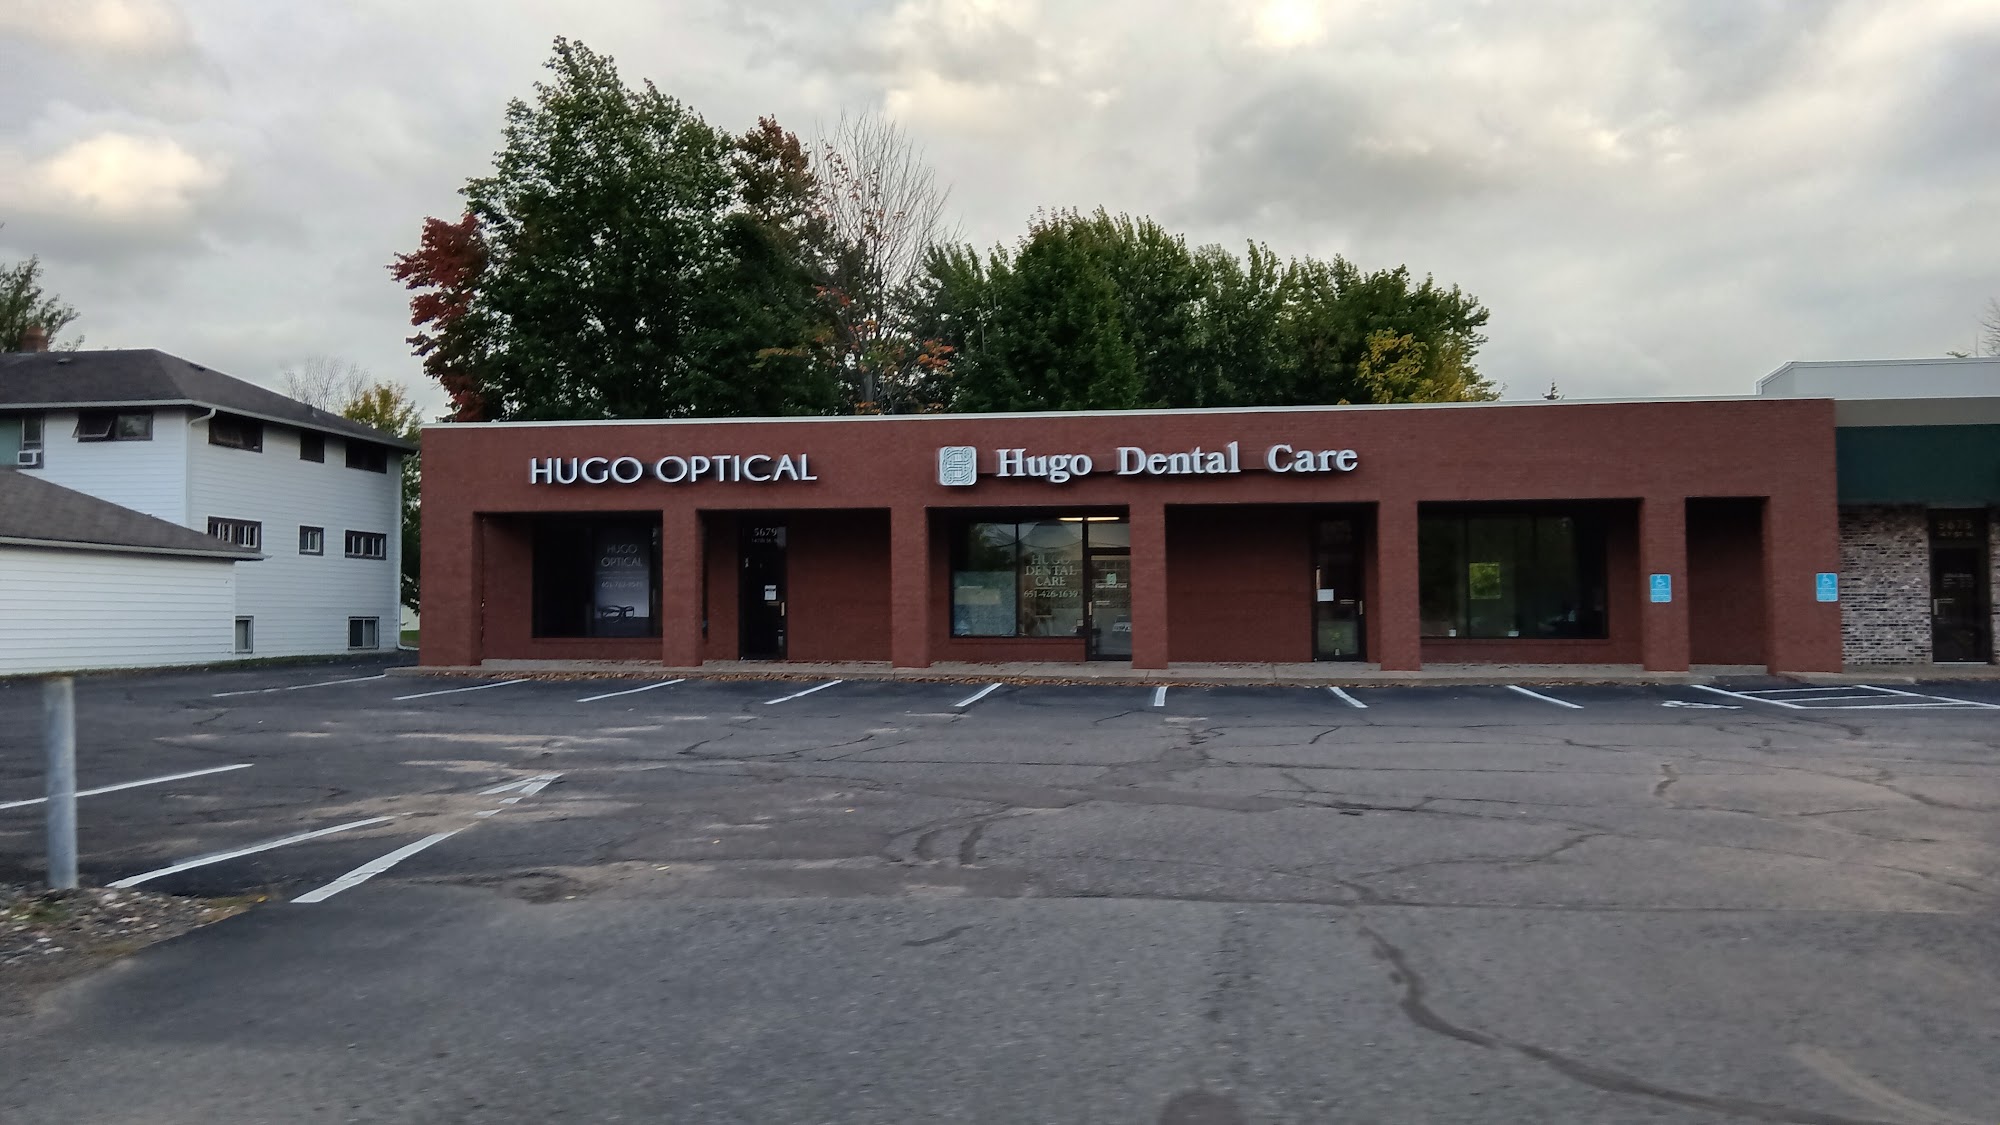 Hugo Dental Care 5677 147th St N, Hugo Minnesota 55038